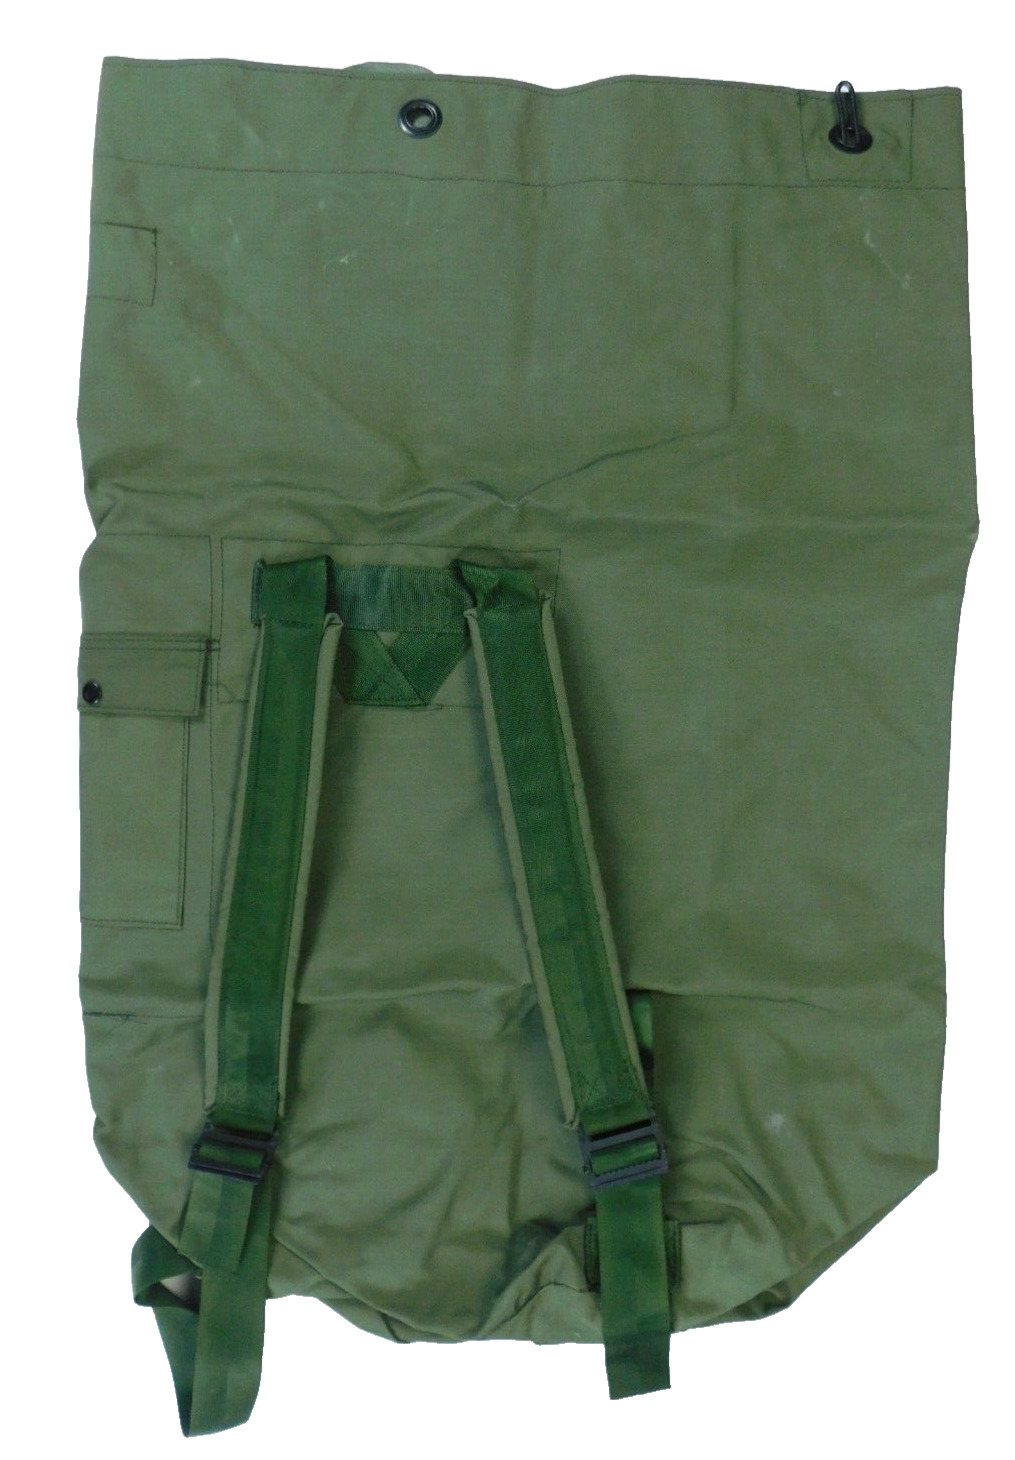 Duffel Bag Camo Green 483 Field Gear Bag Water Repellent US Army USN USAF USMC